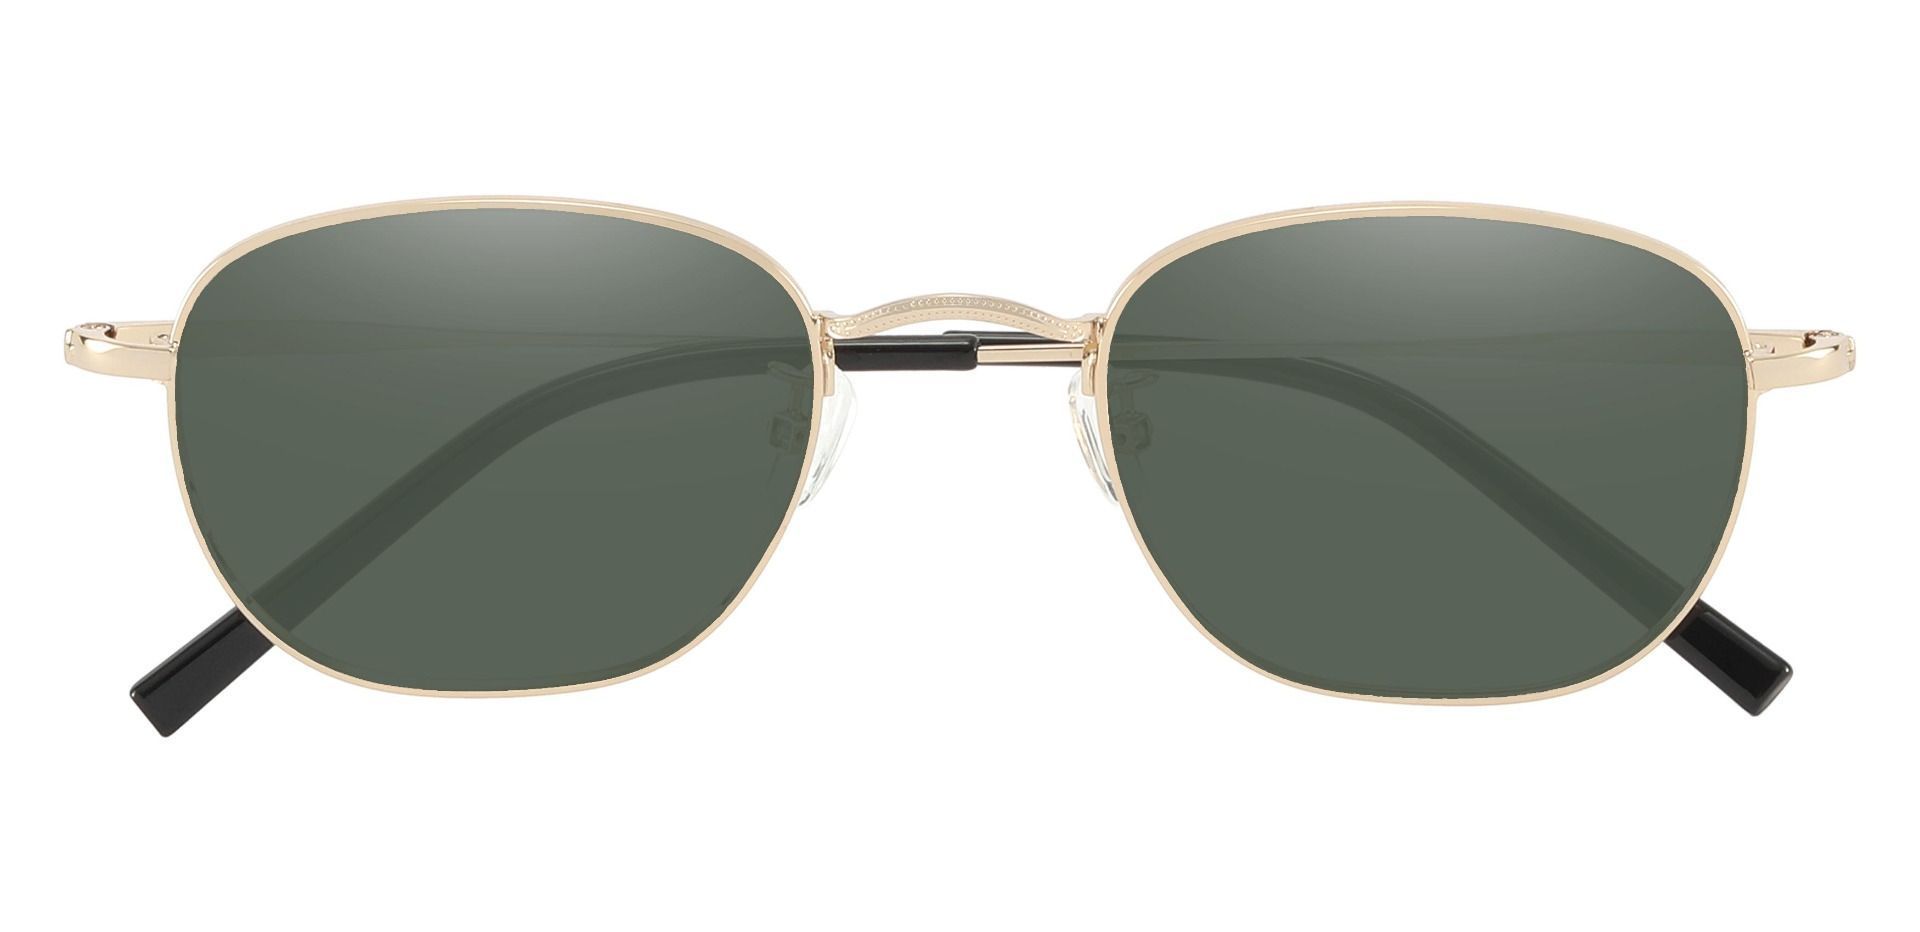 Greece Square Prescription Sunglasses - Gold Frame With Green Lenses